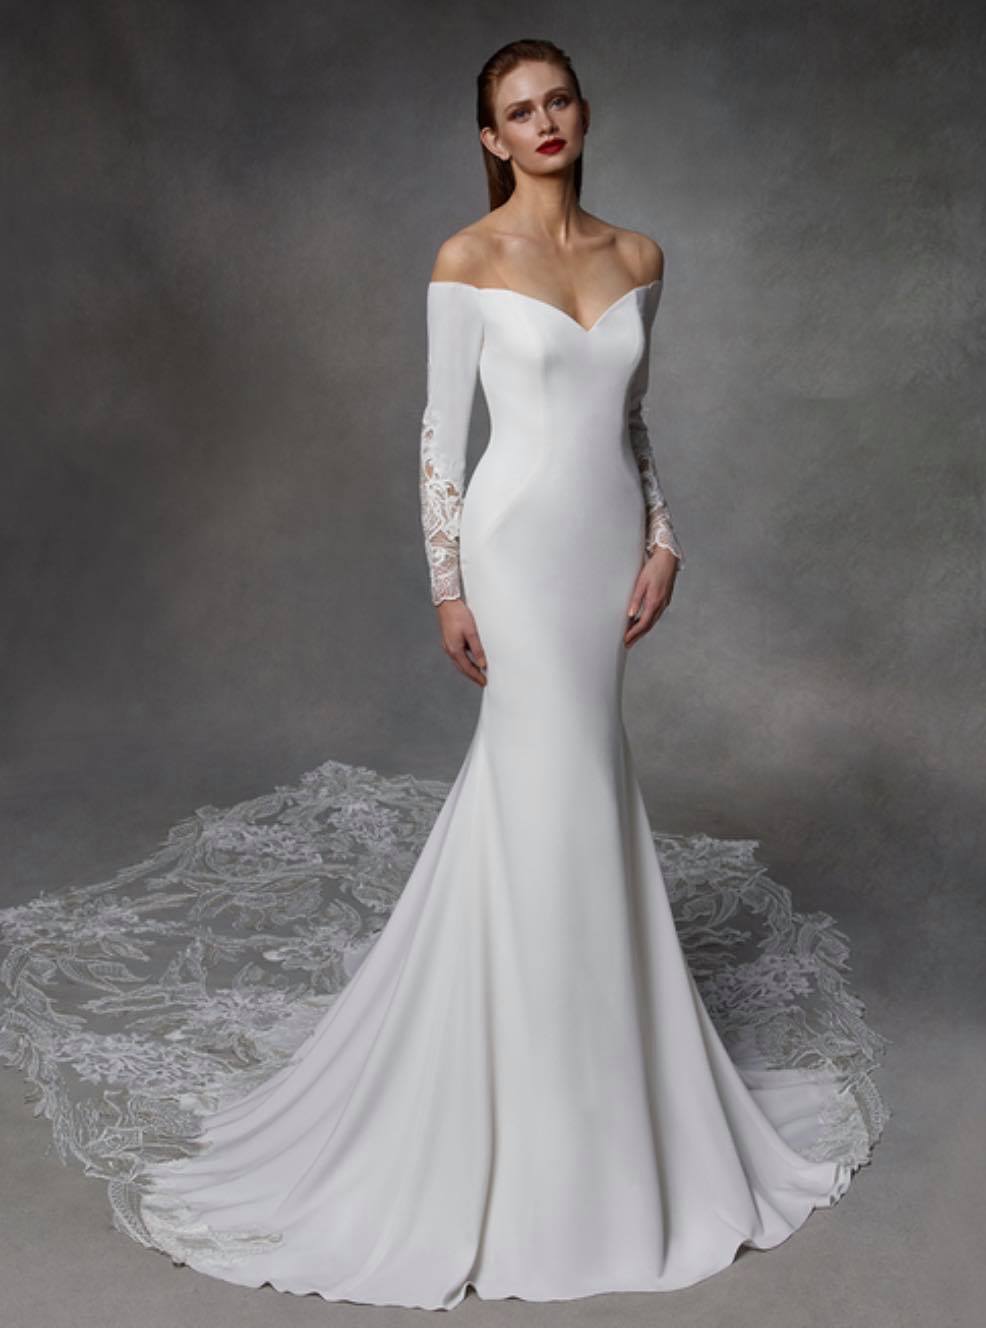 Dion for Brides | Wedding Dresses Perth